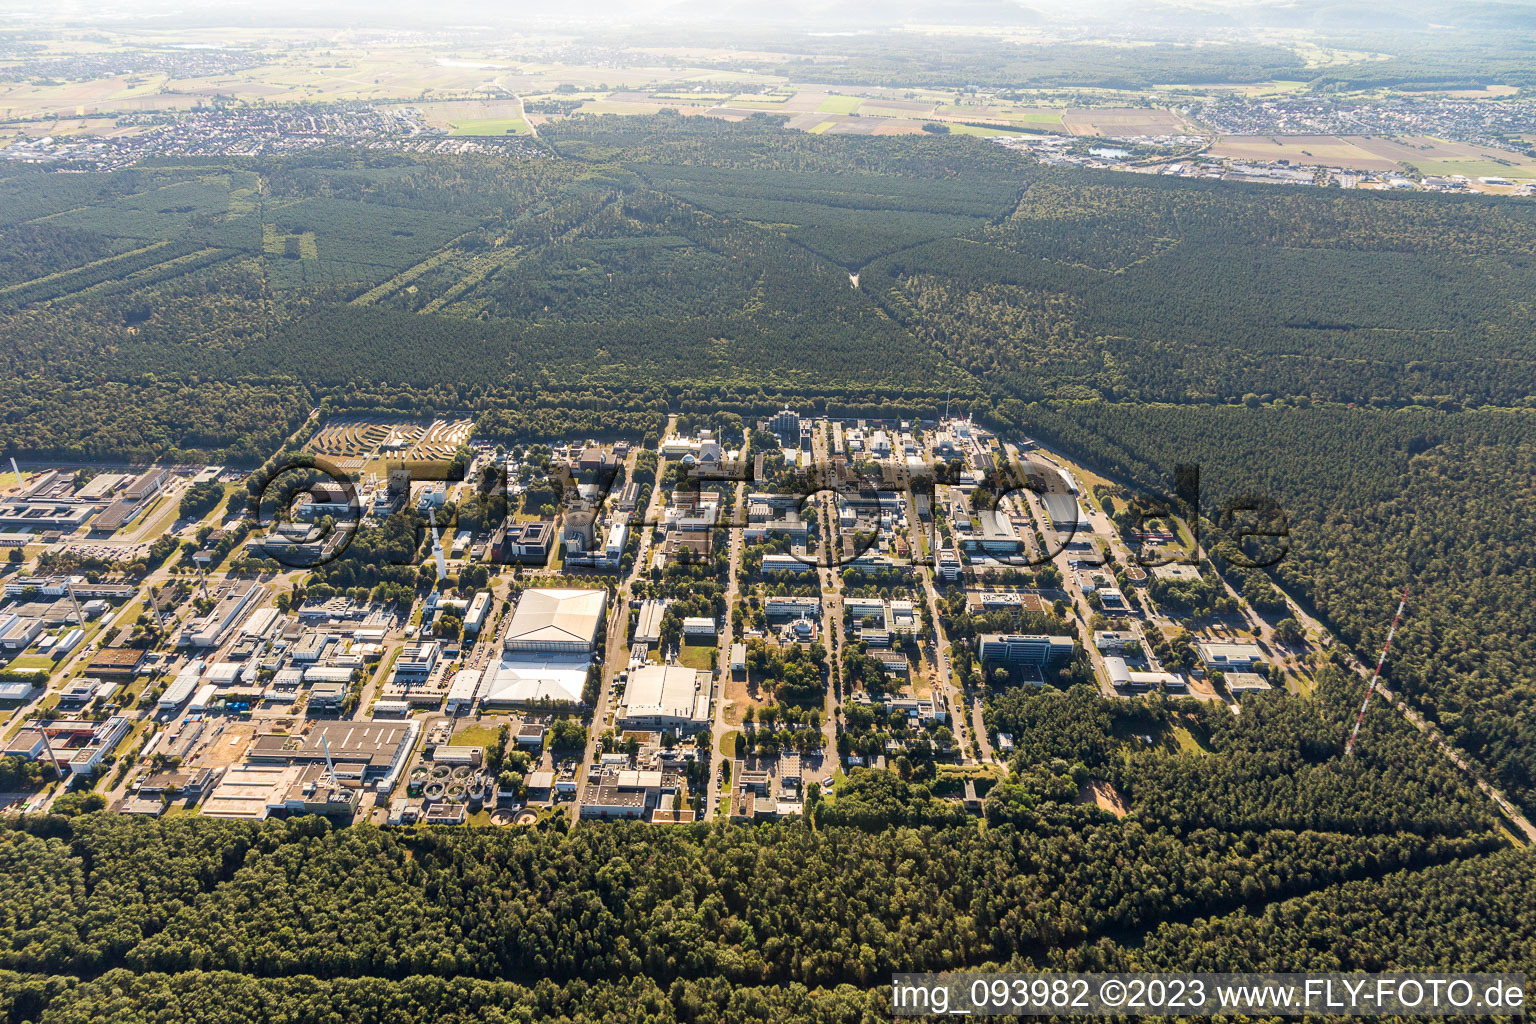 Quartier Leopoldshafen in Eggenstein-Leopoldshafen dans le département Bade-Wurtemberg, Allemagne vu d'un drone